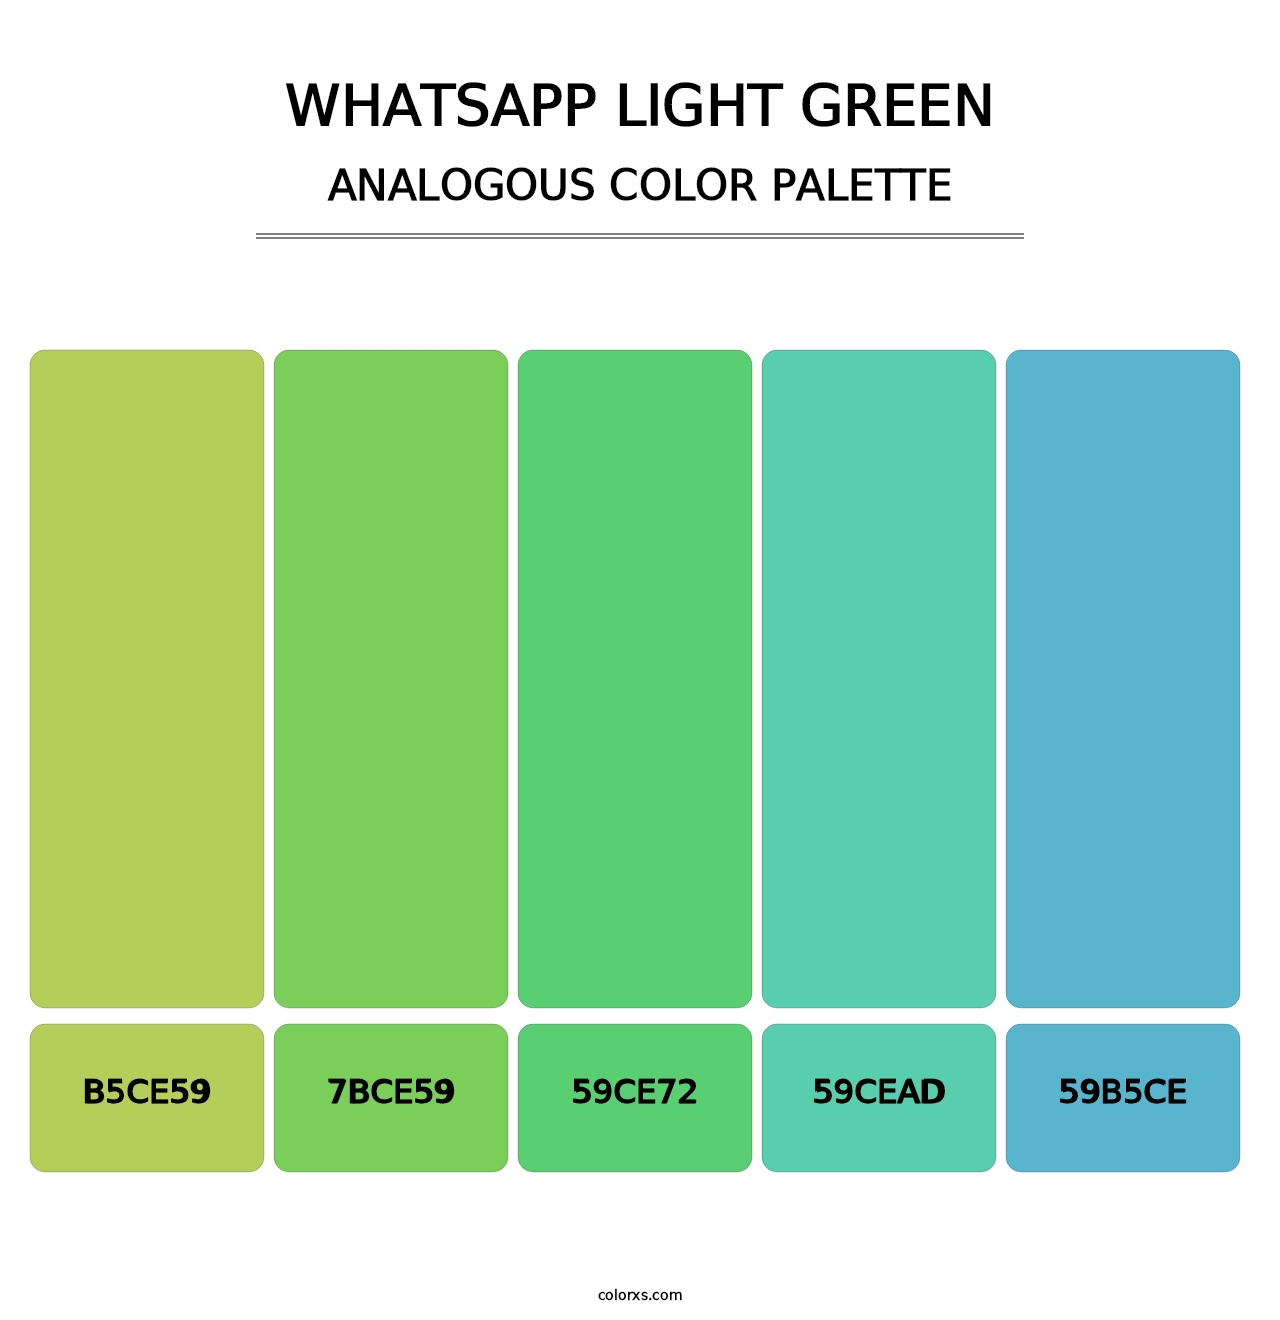 WhatsApp Light Green - Analogous Color Palette